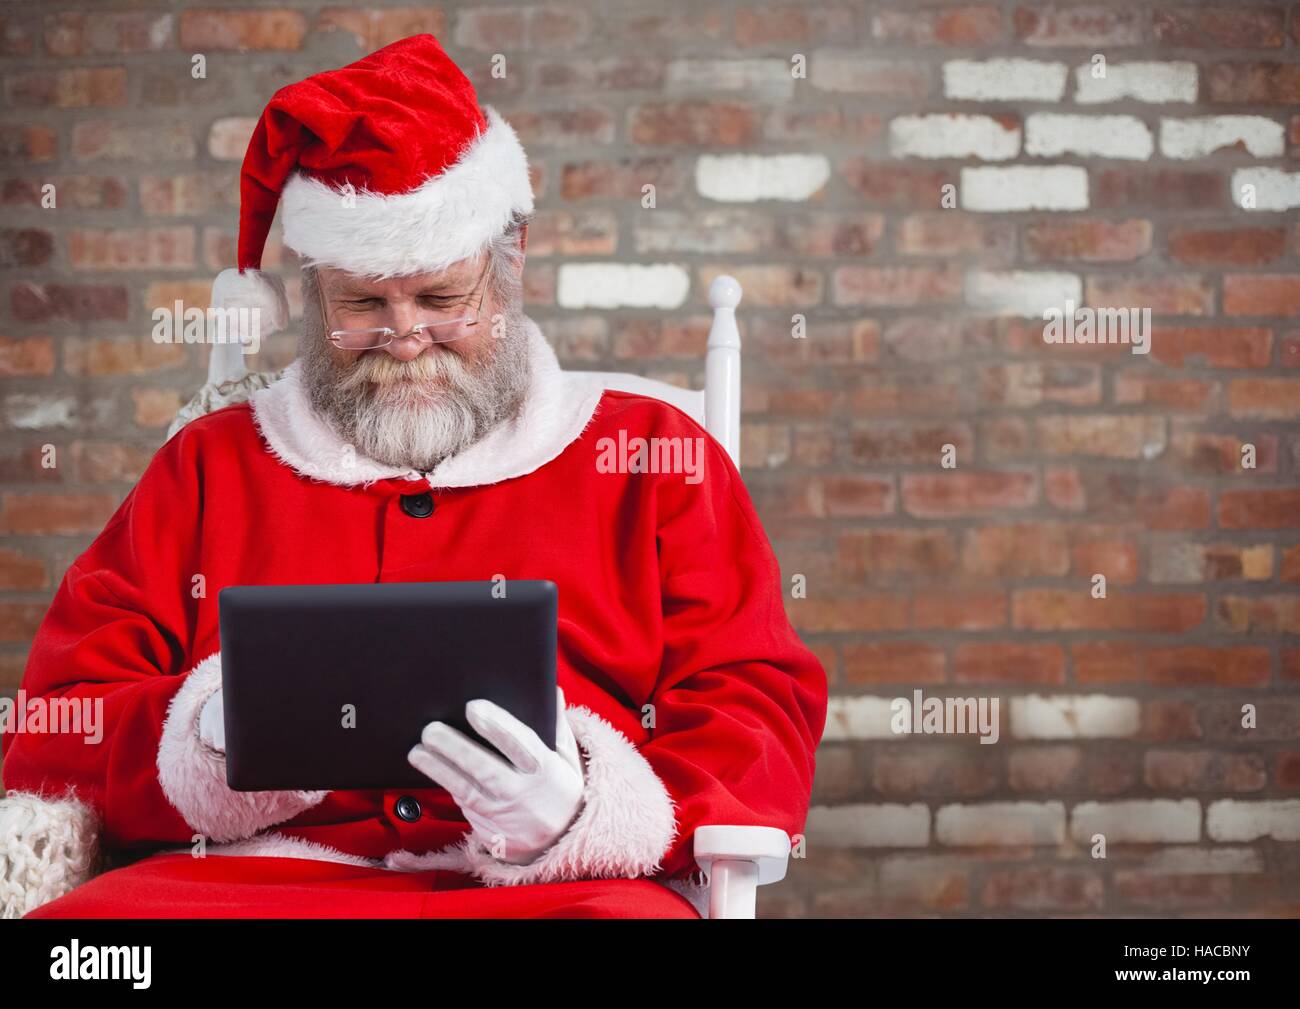 Santa claus using a digital tablet Stock Photo